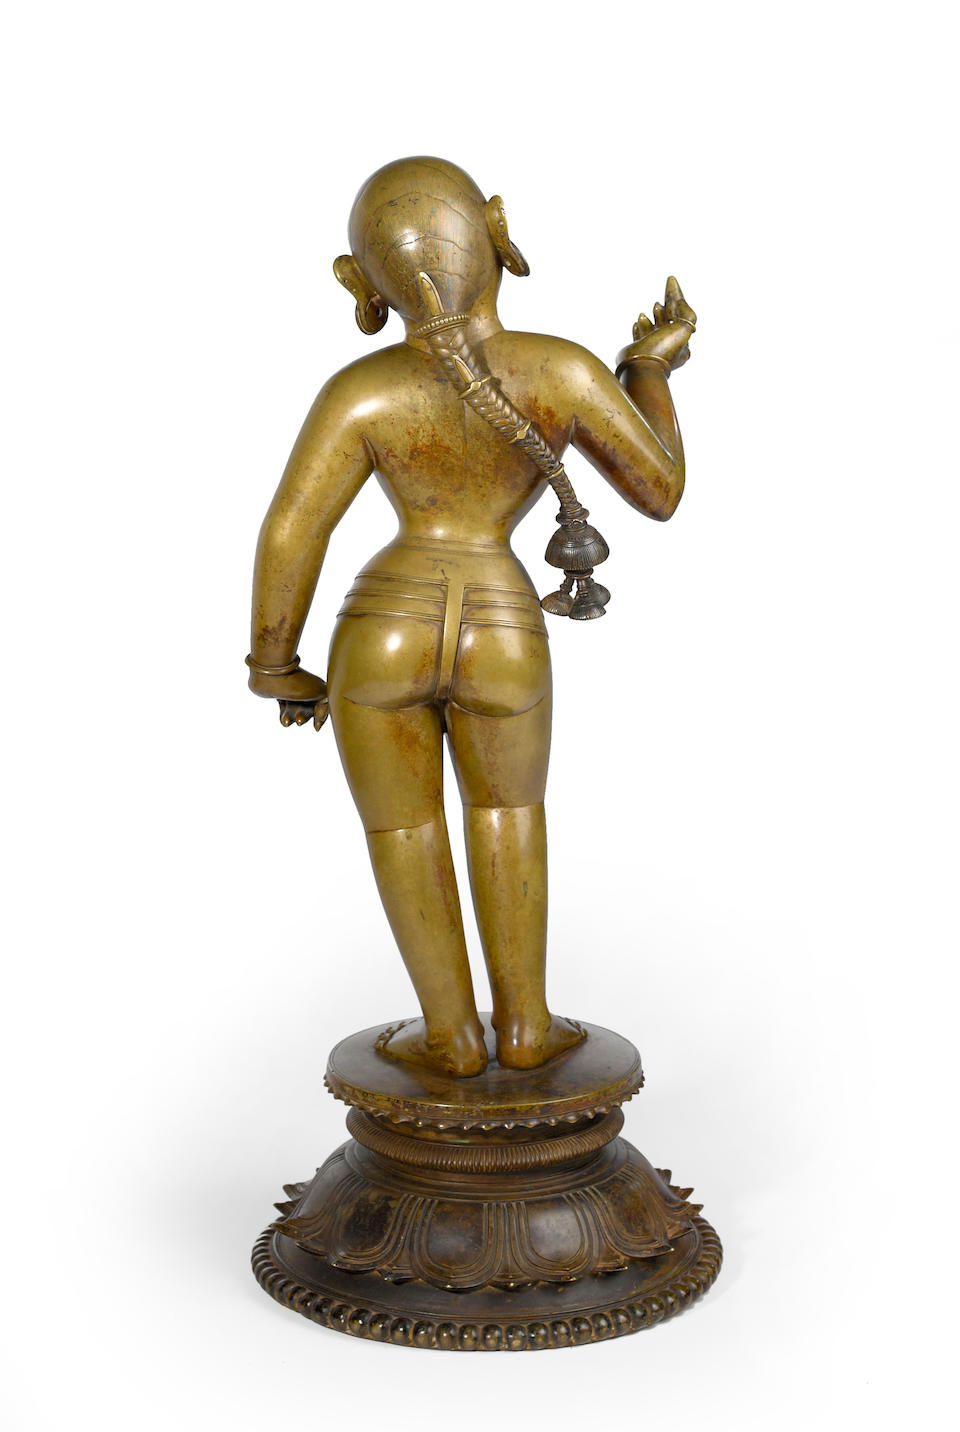 A brass figure of Radha Orissa, circa 16th century